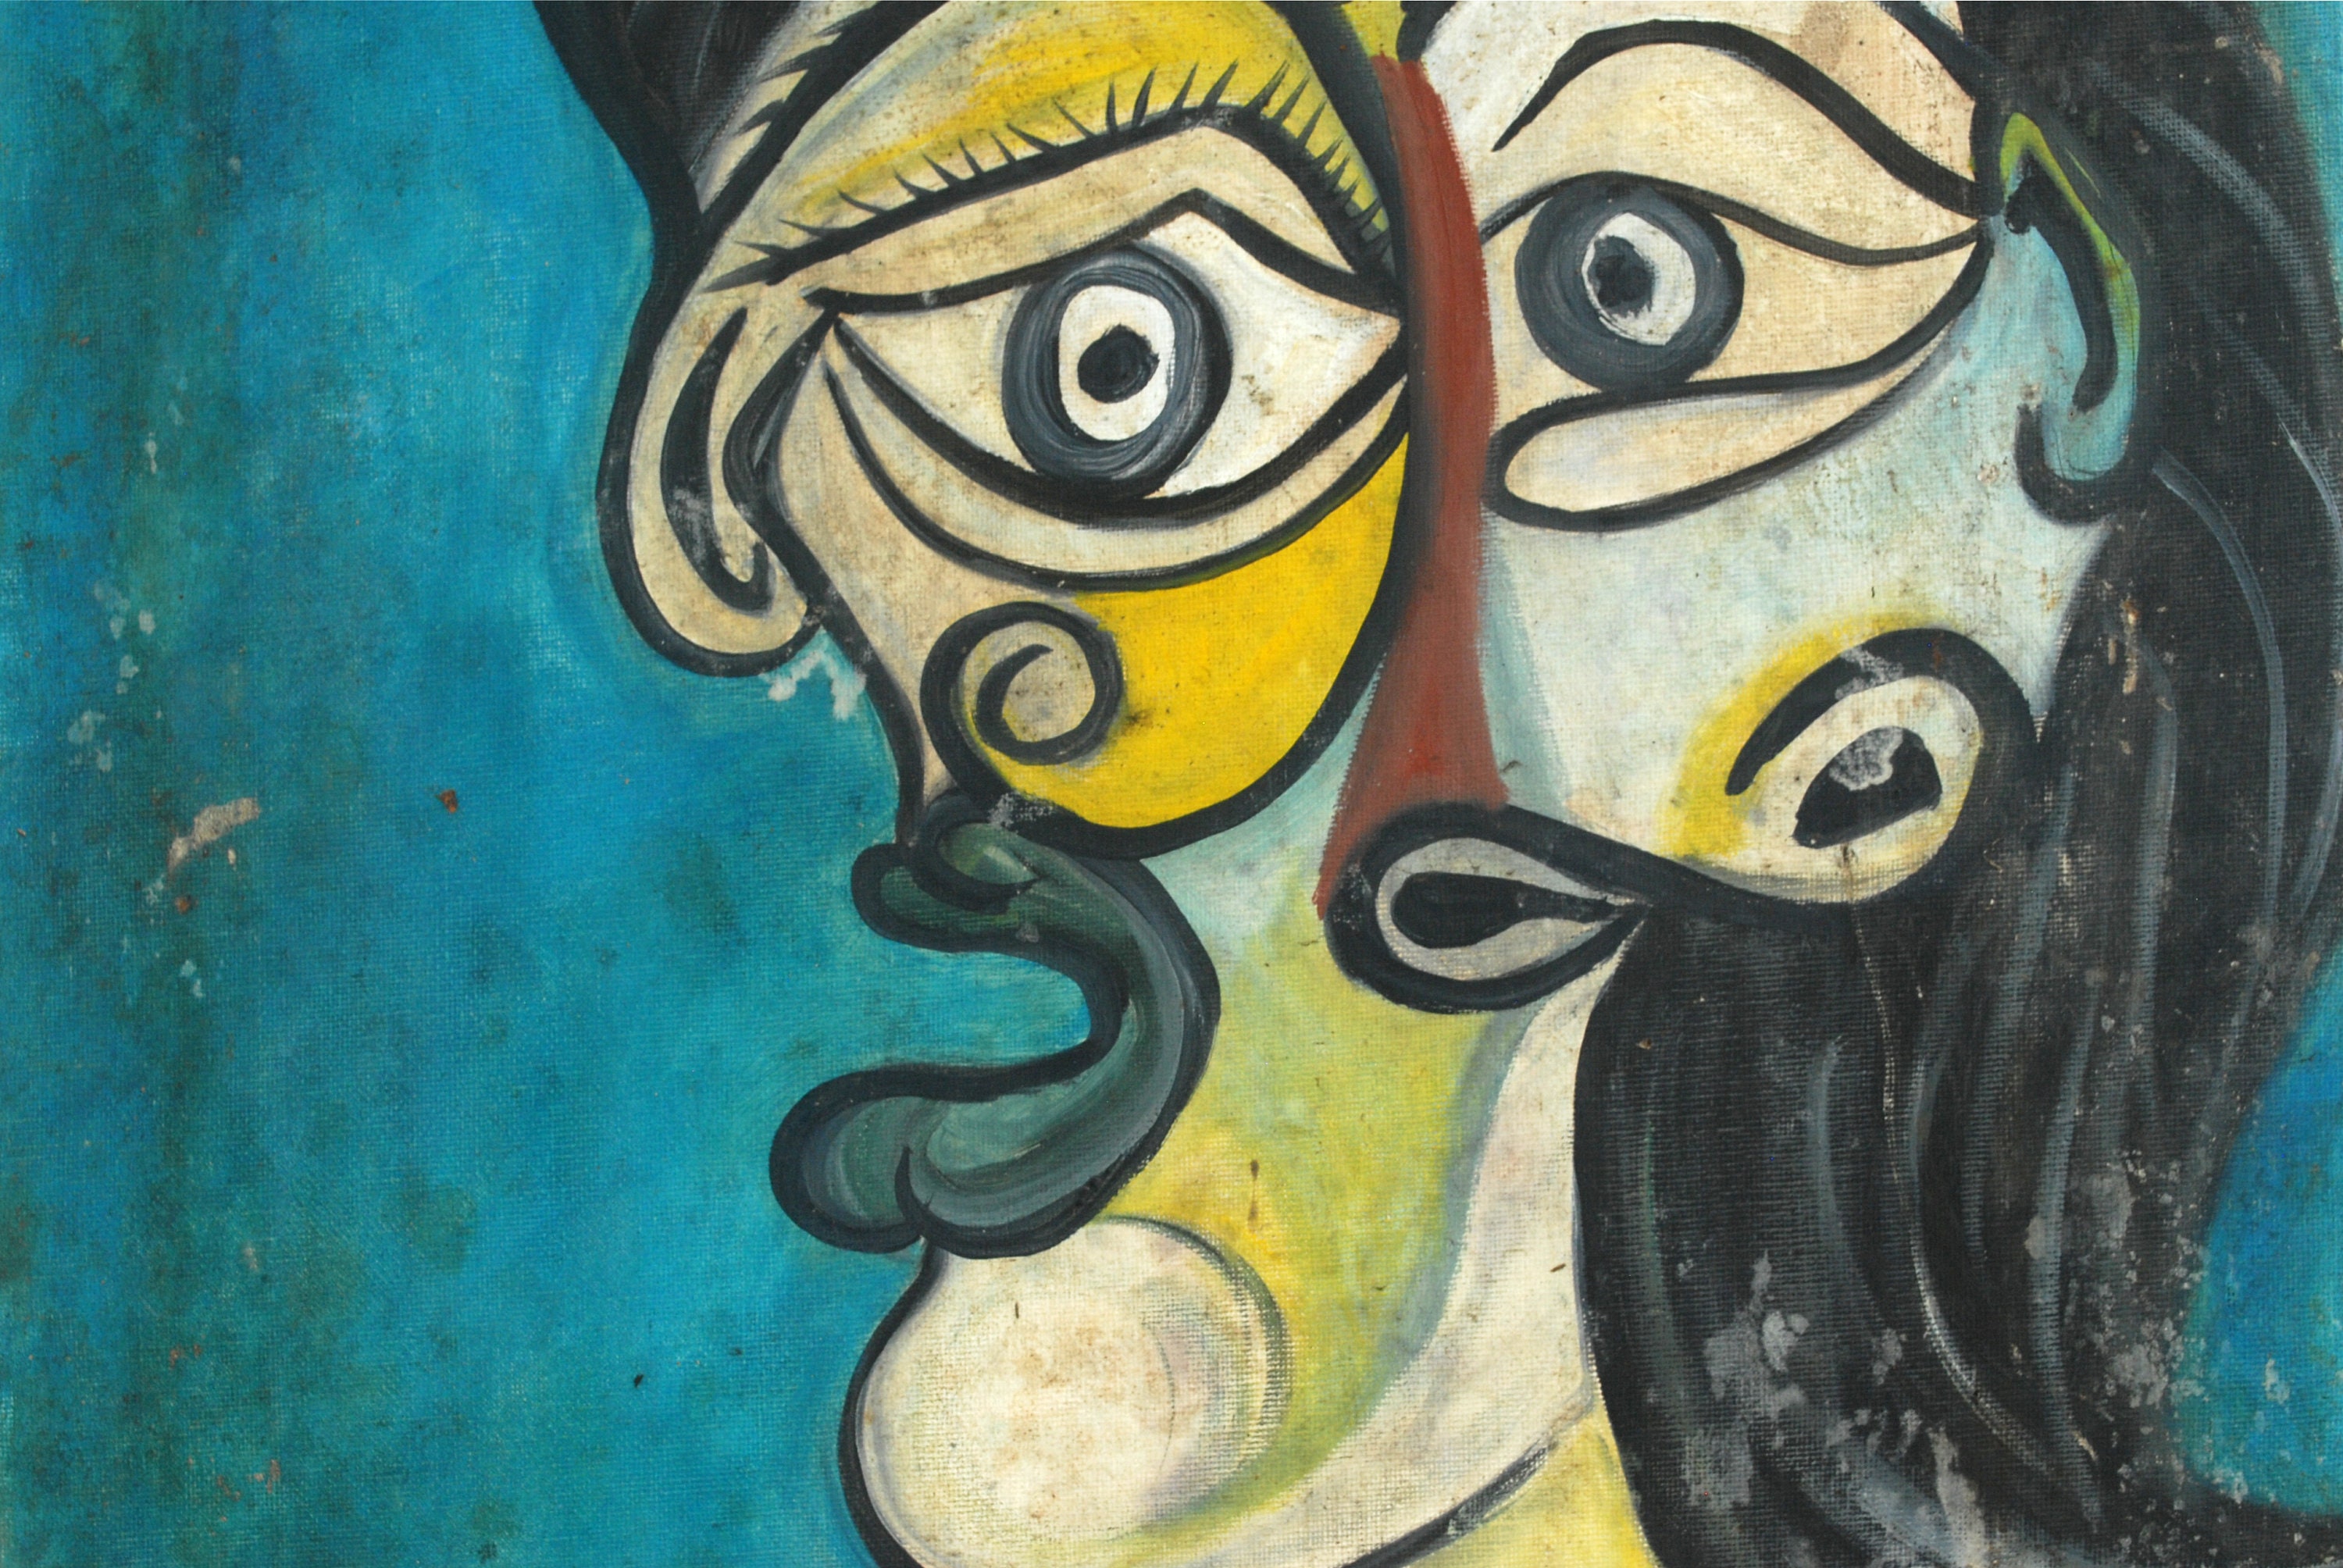 Pablo Picasso Ölgemälde Original datiert 1939 Picasso Gemälde | Etsy